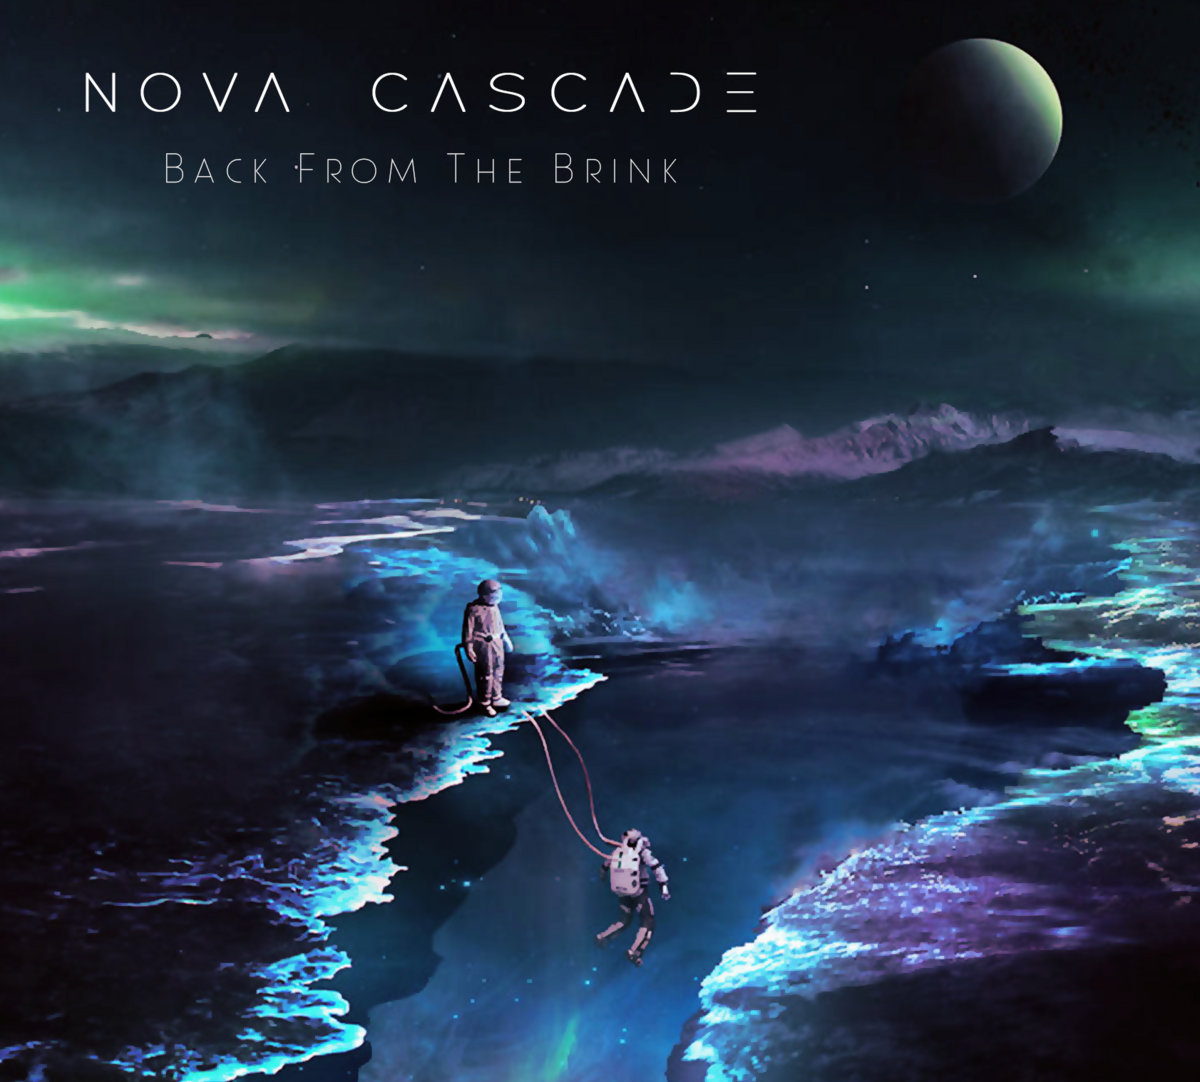 Nova Cascade – "Back from the Brink"